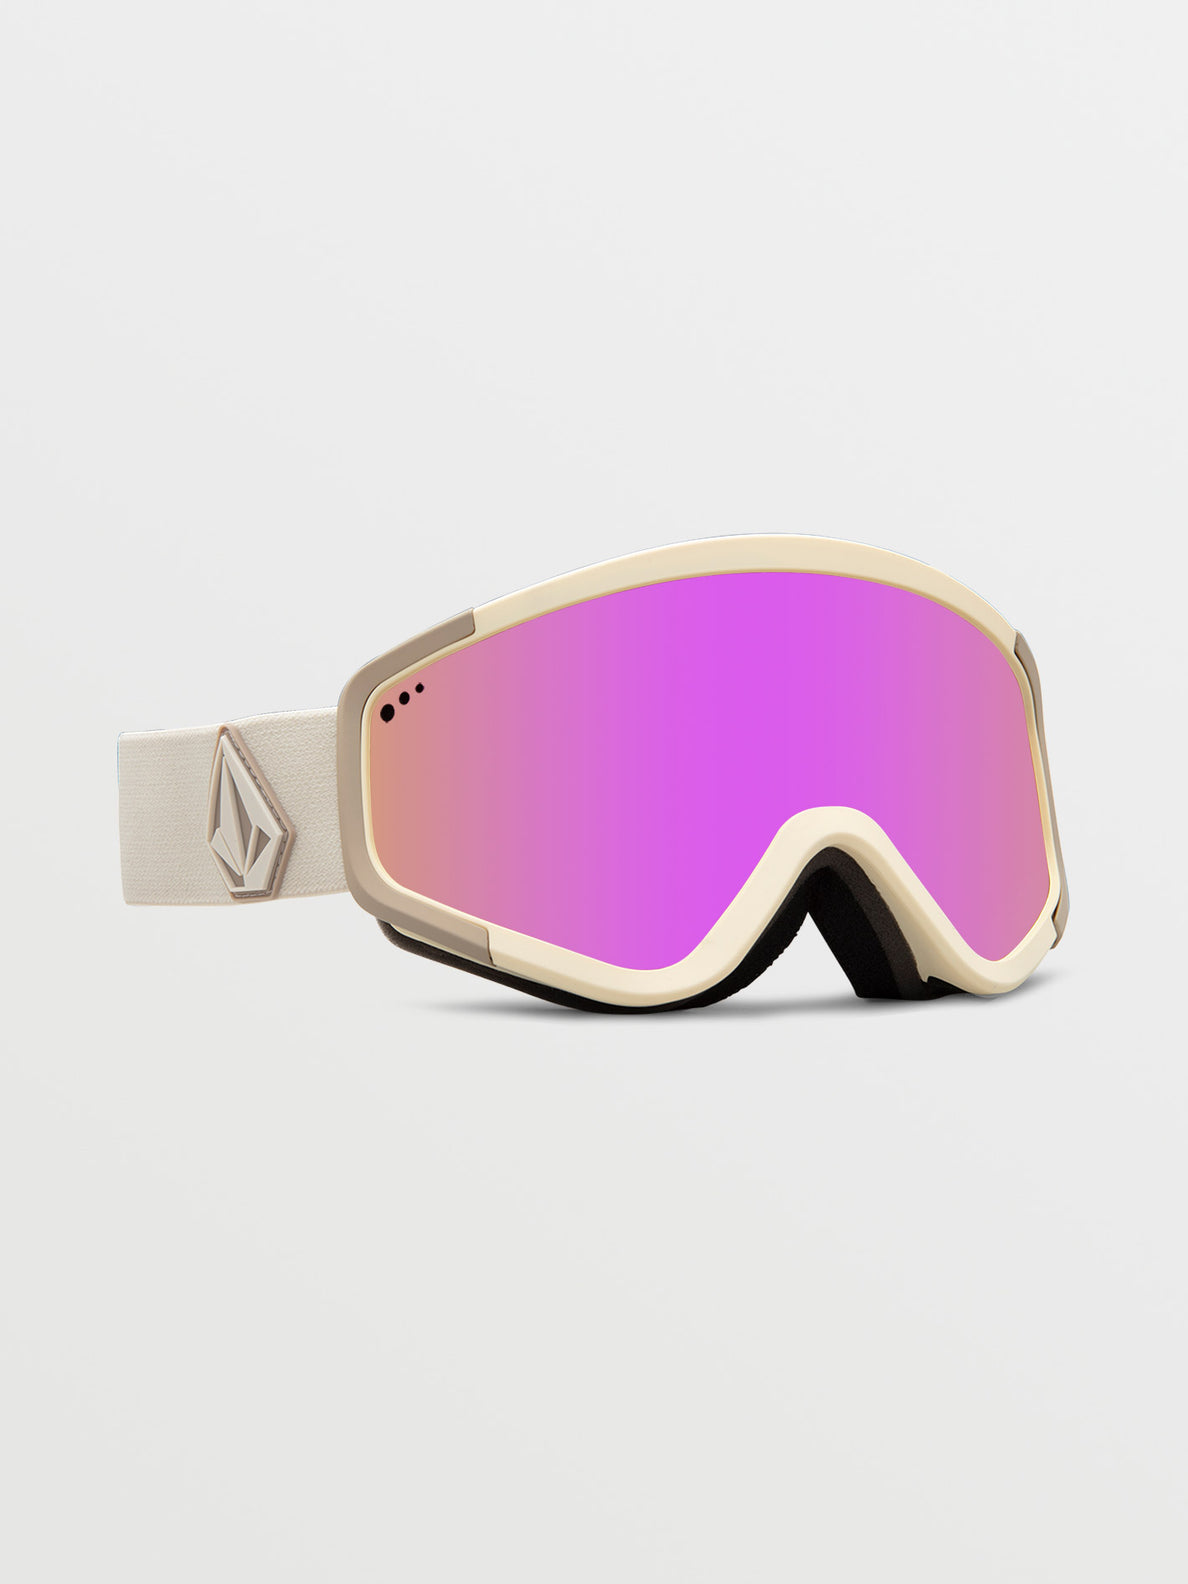 Attunga Goggle - Khakiest/Sand / Pink Chrome+BL